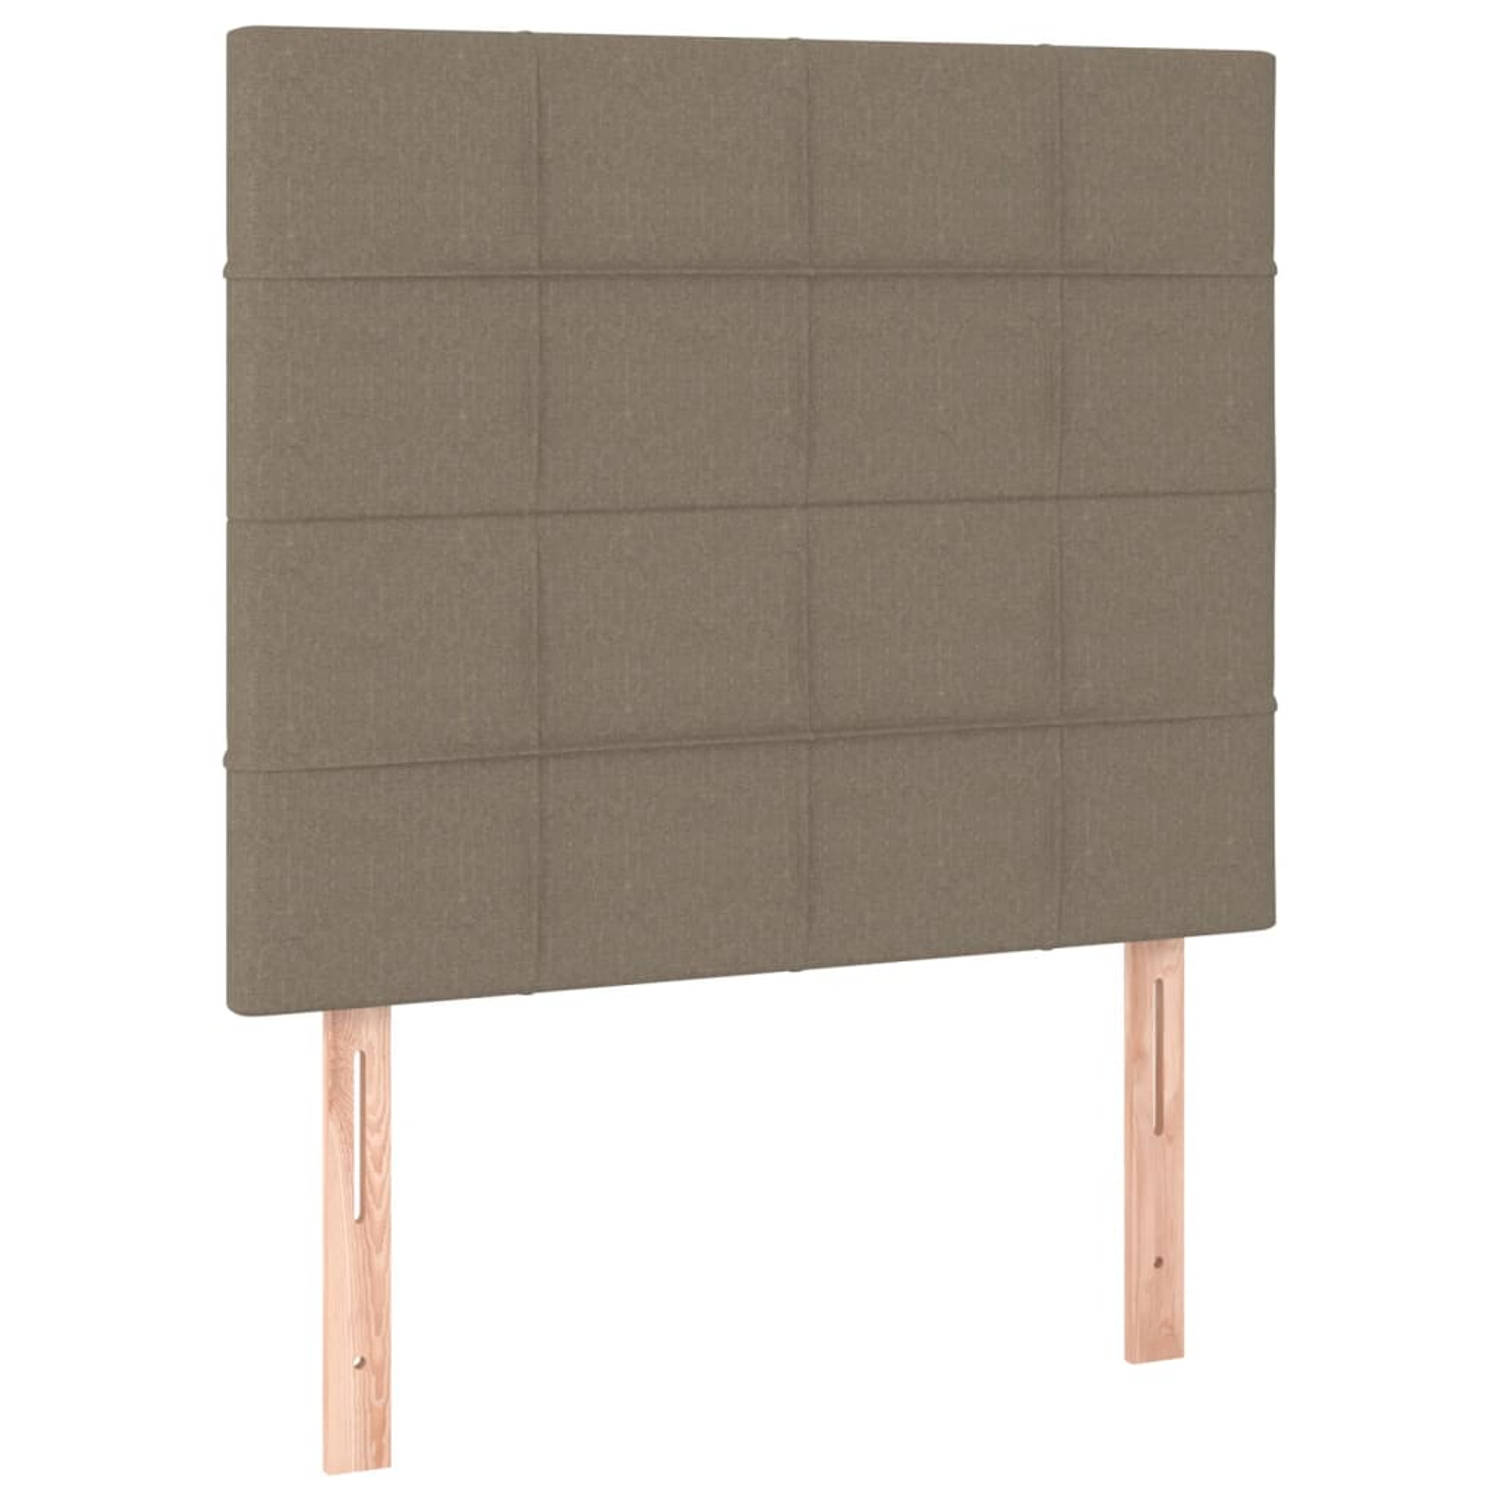 The Living Store Hoofdbord - Klassiek design - Stijlvolle uitstraling - Taupe kleur - Duurzaam materiaal - Verstelbare hoogte - Stevige poten - Comfortabele ondersteuning